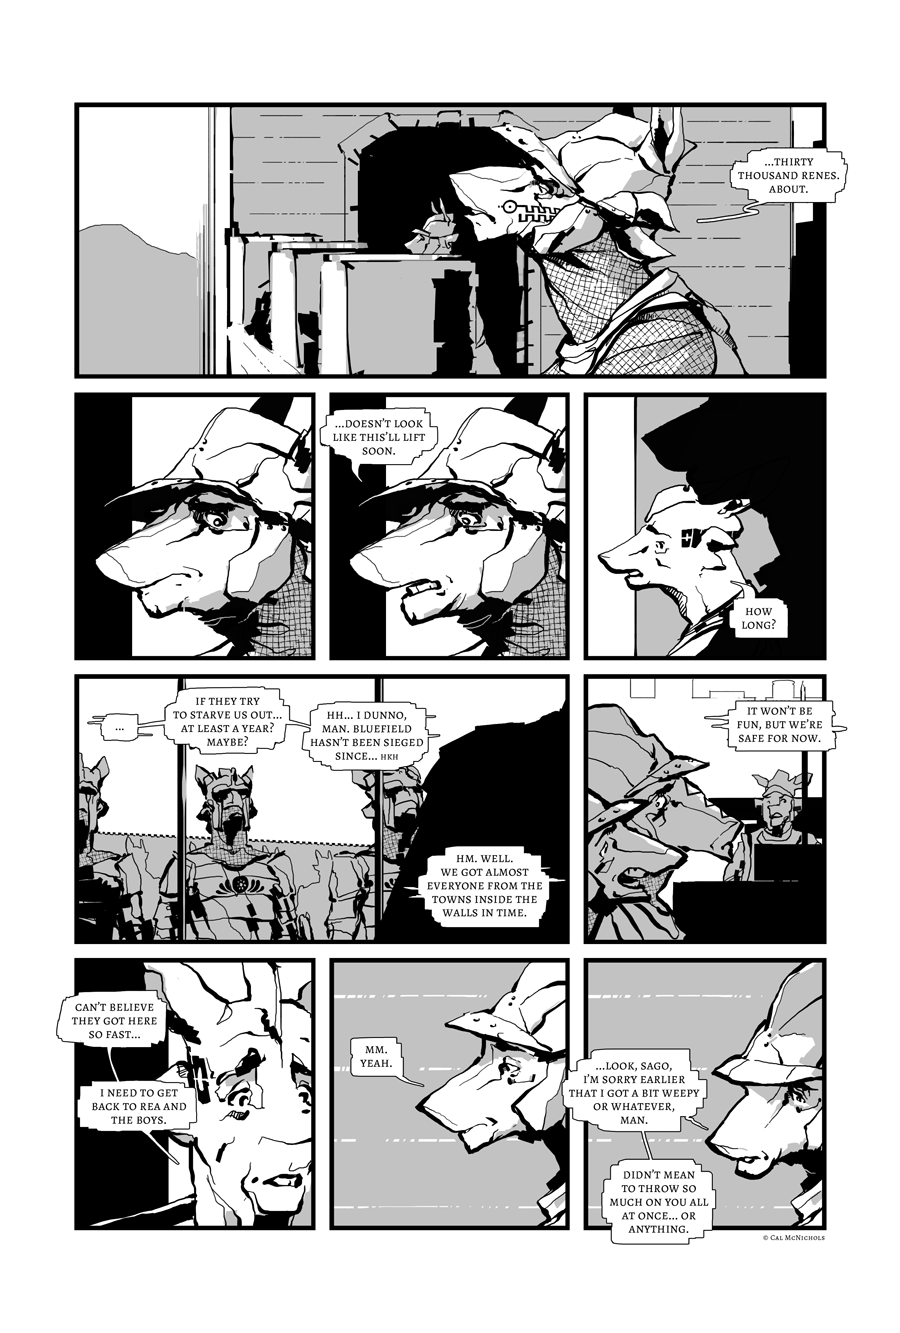 pg 26